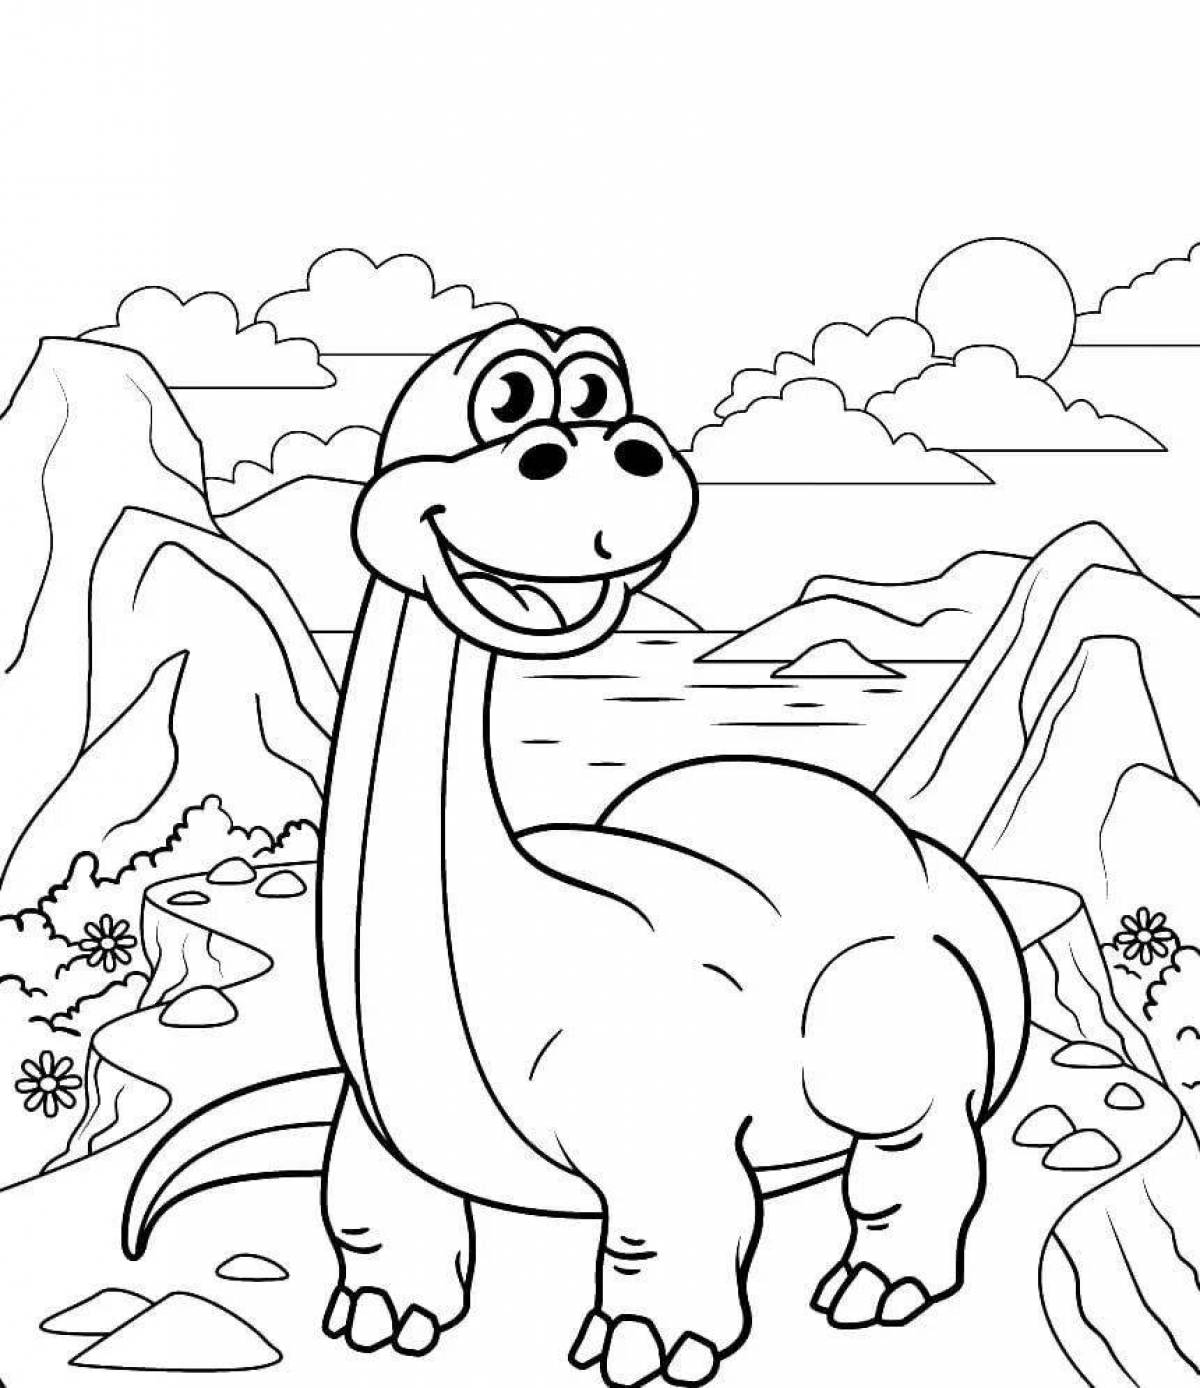 Fat cartoon dinosaur coloring page